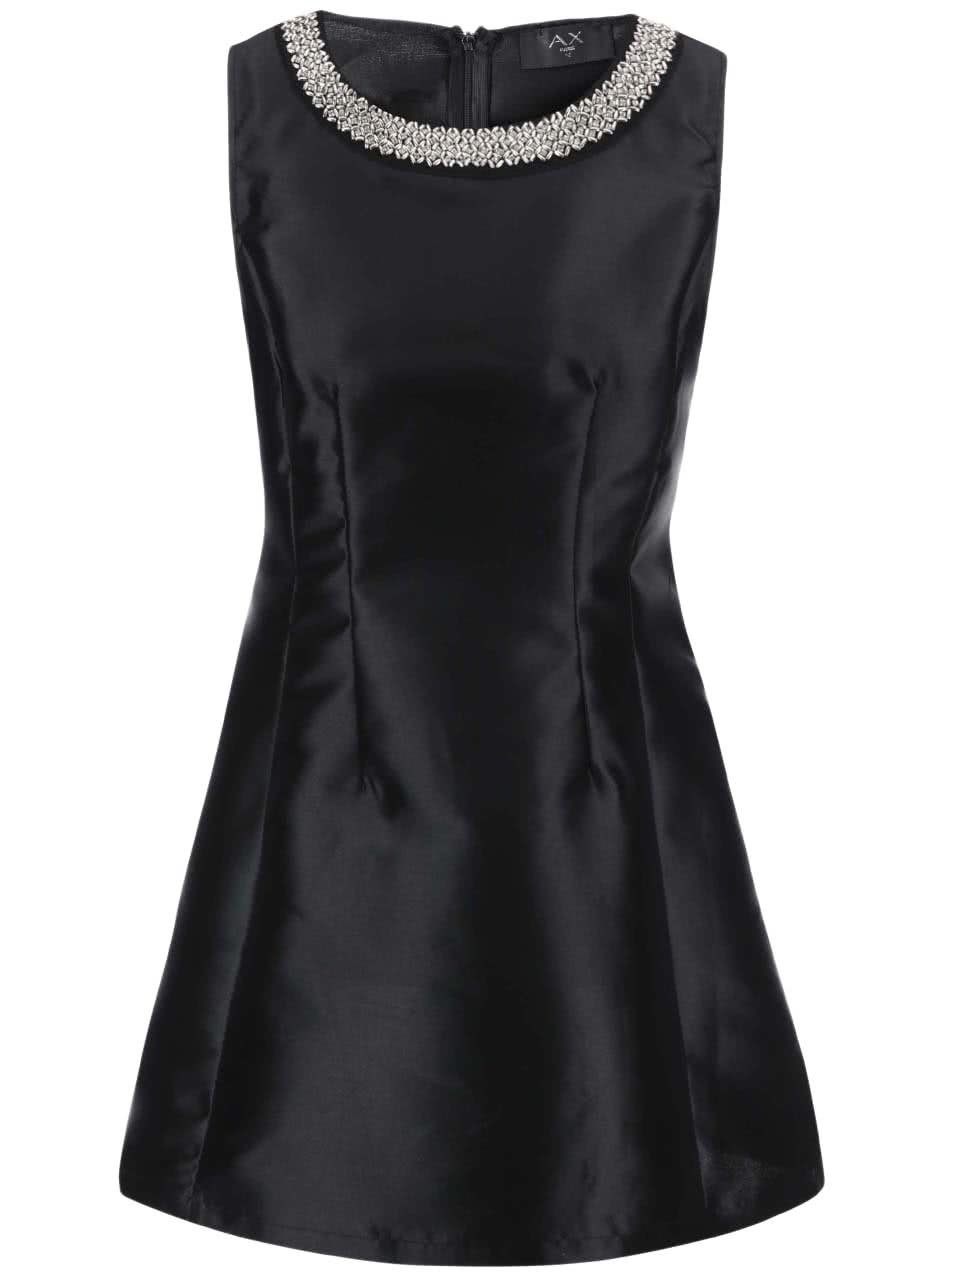 Černé šaty s ozdobnou aplikací v dekoltu AX Paris